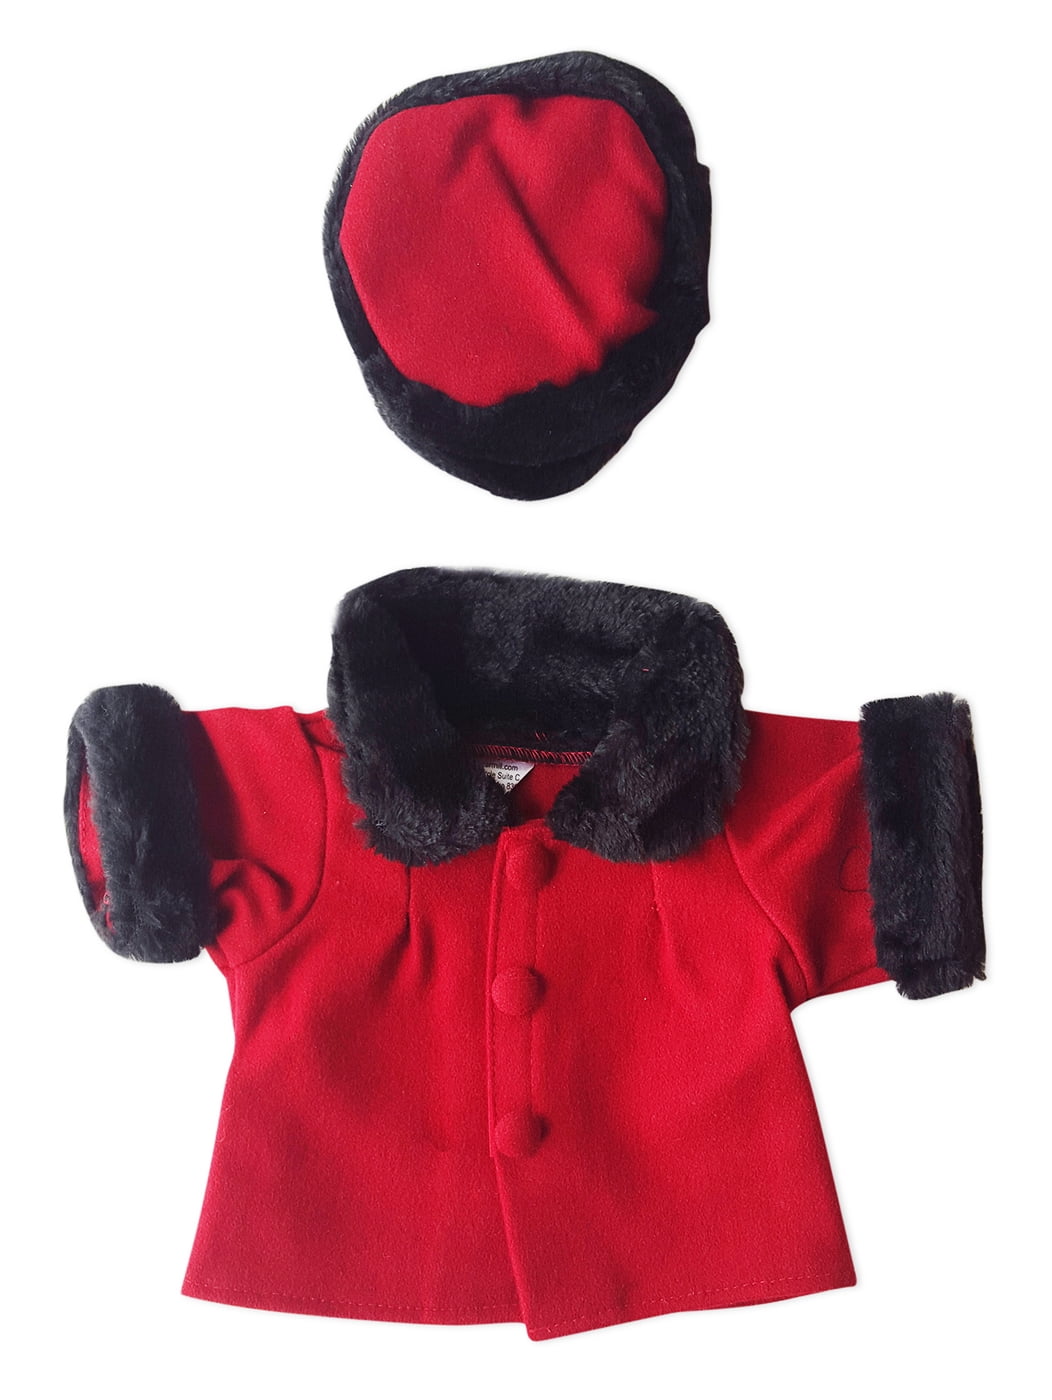 TEDDY BEAR RED CHRISTMAS COAT & SKIRT CLOTHES Fit 14"-18" Build-a-bear !!NEW!! 